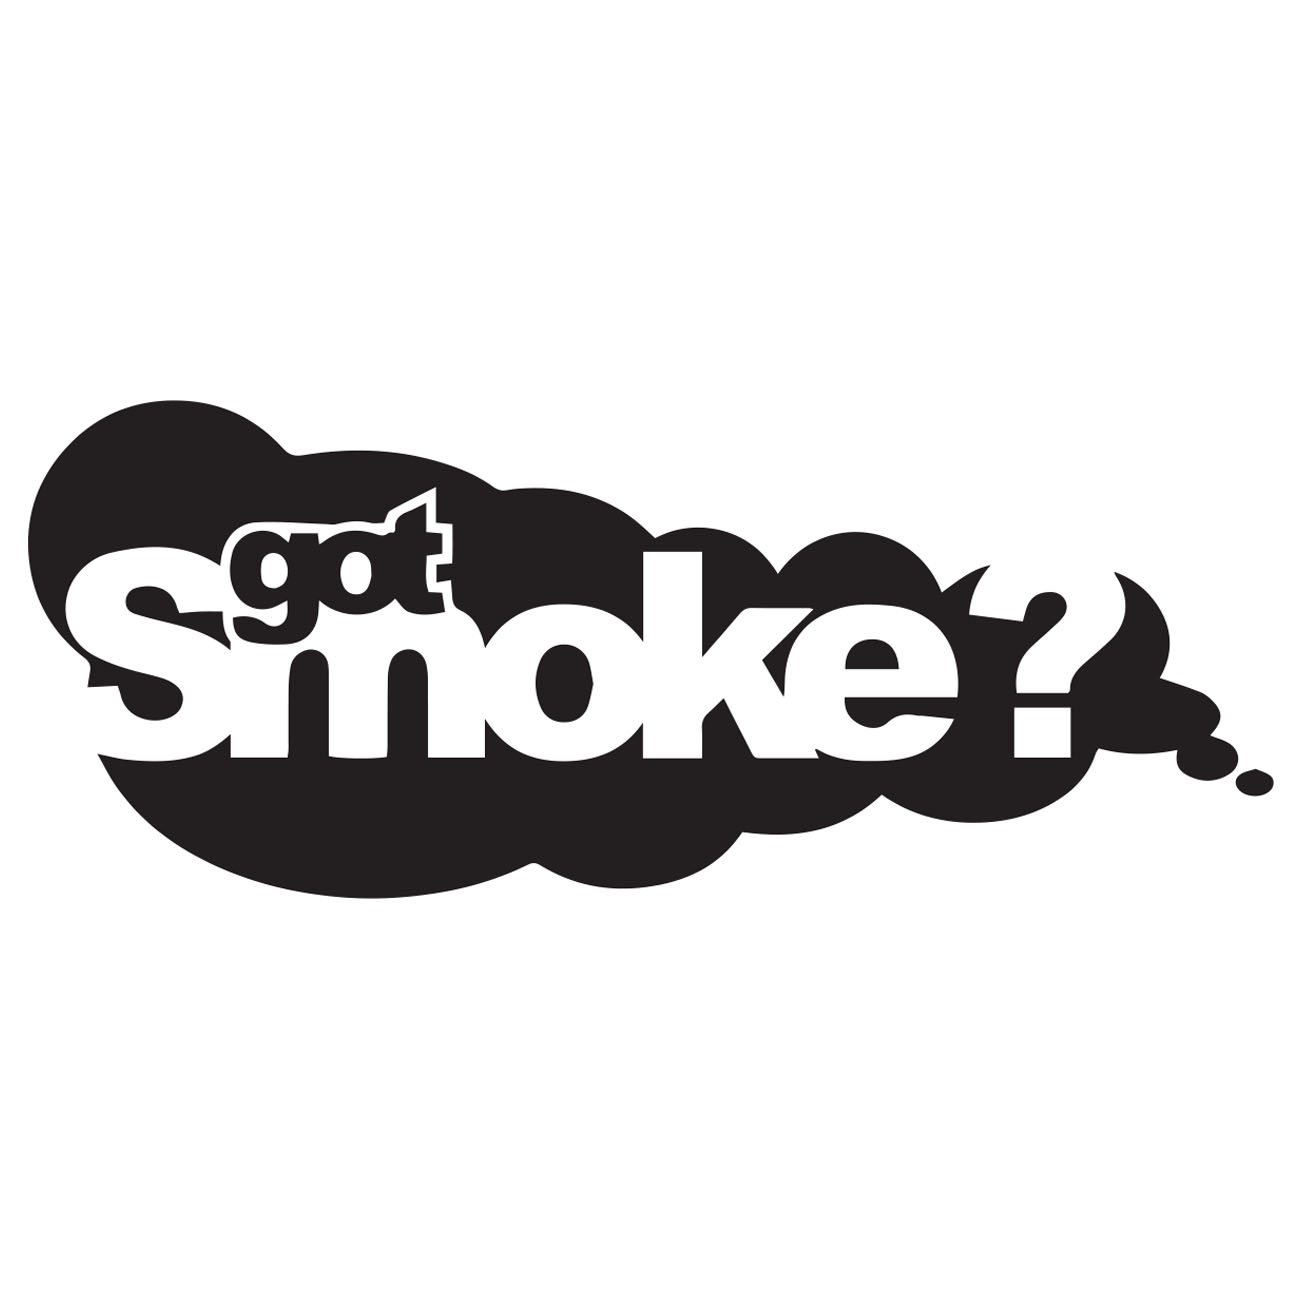 Got smoke